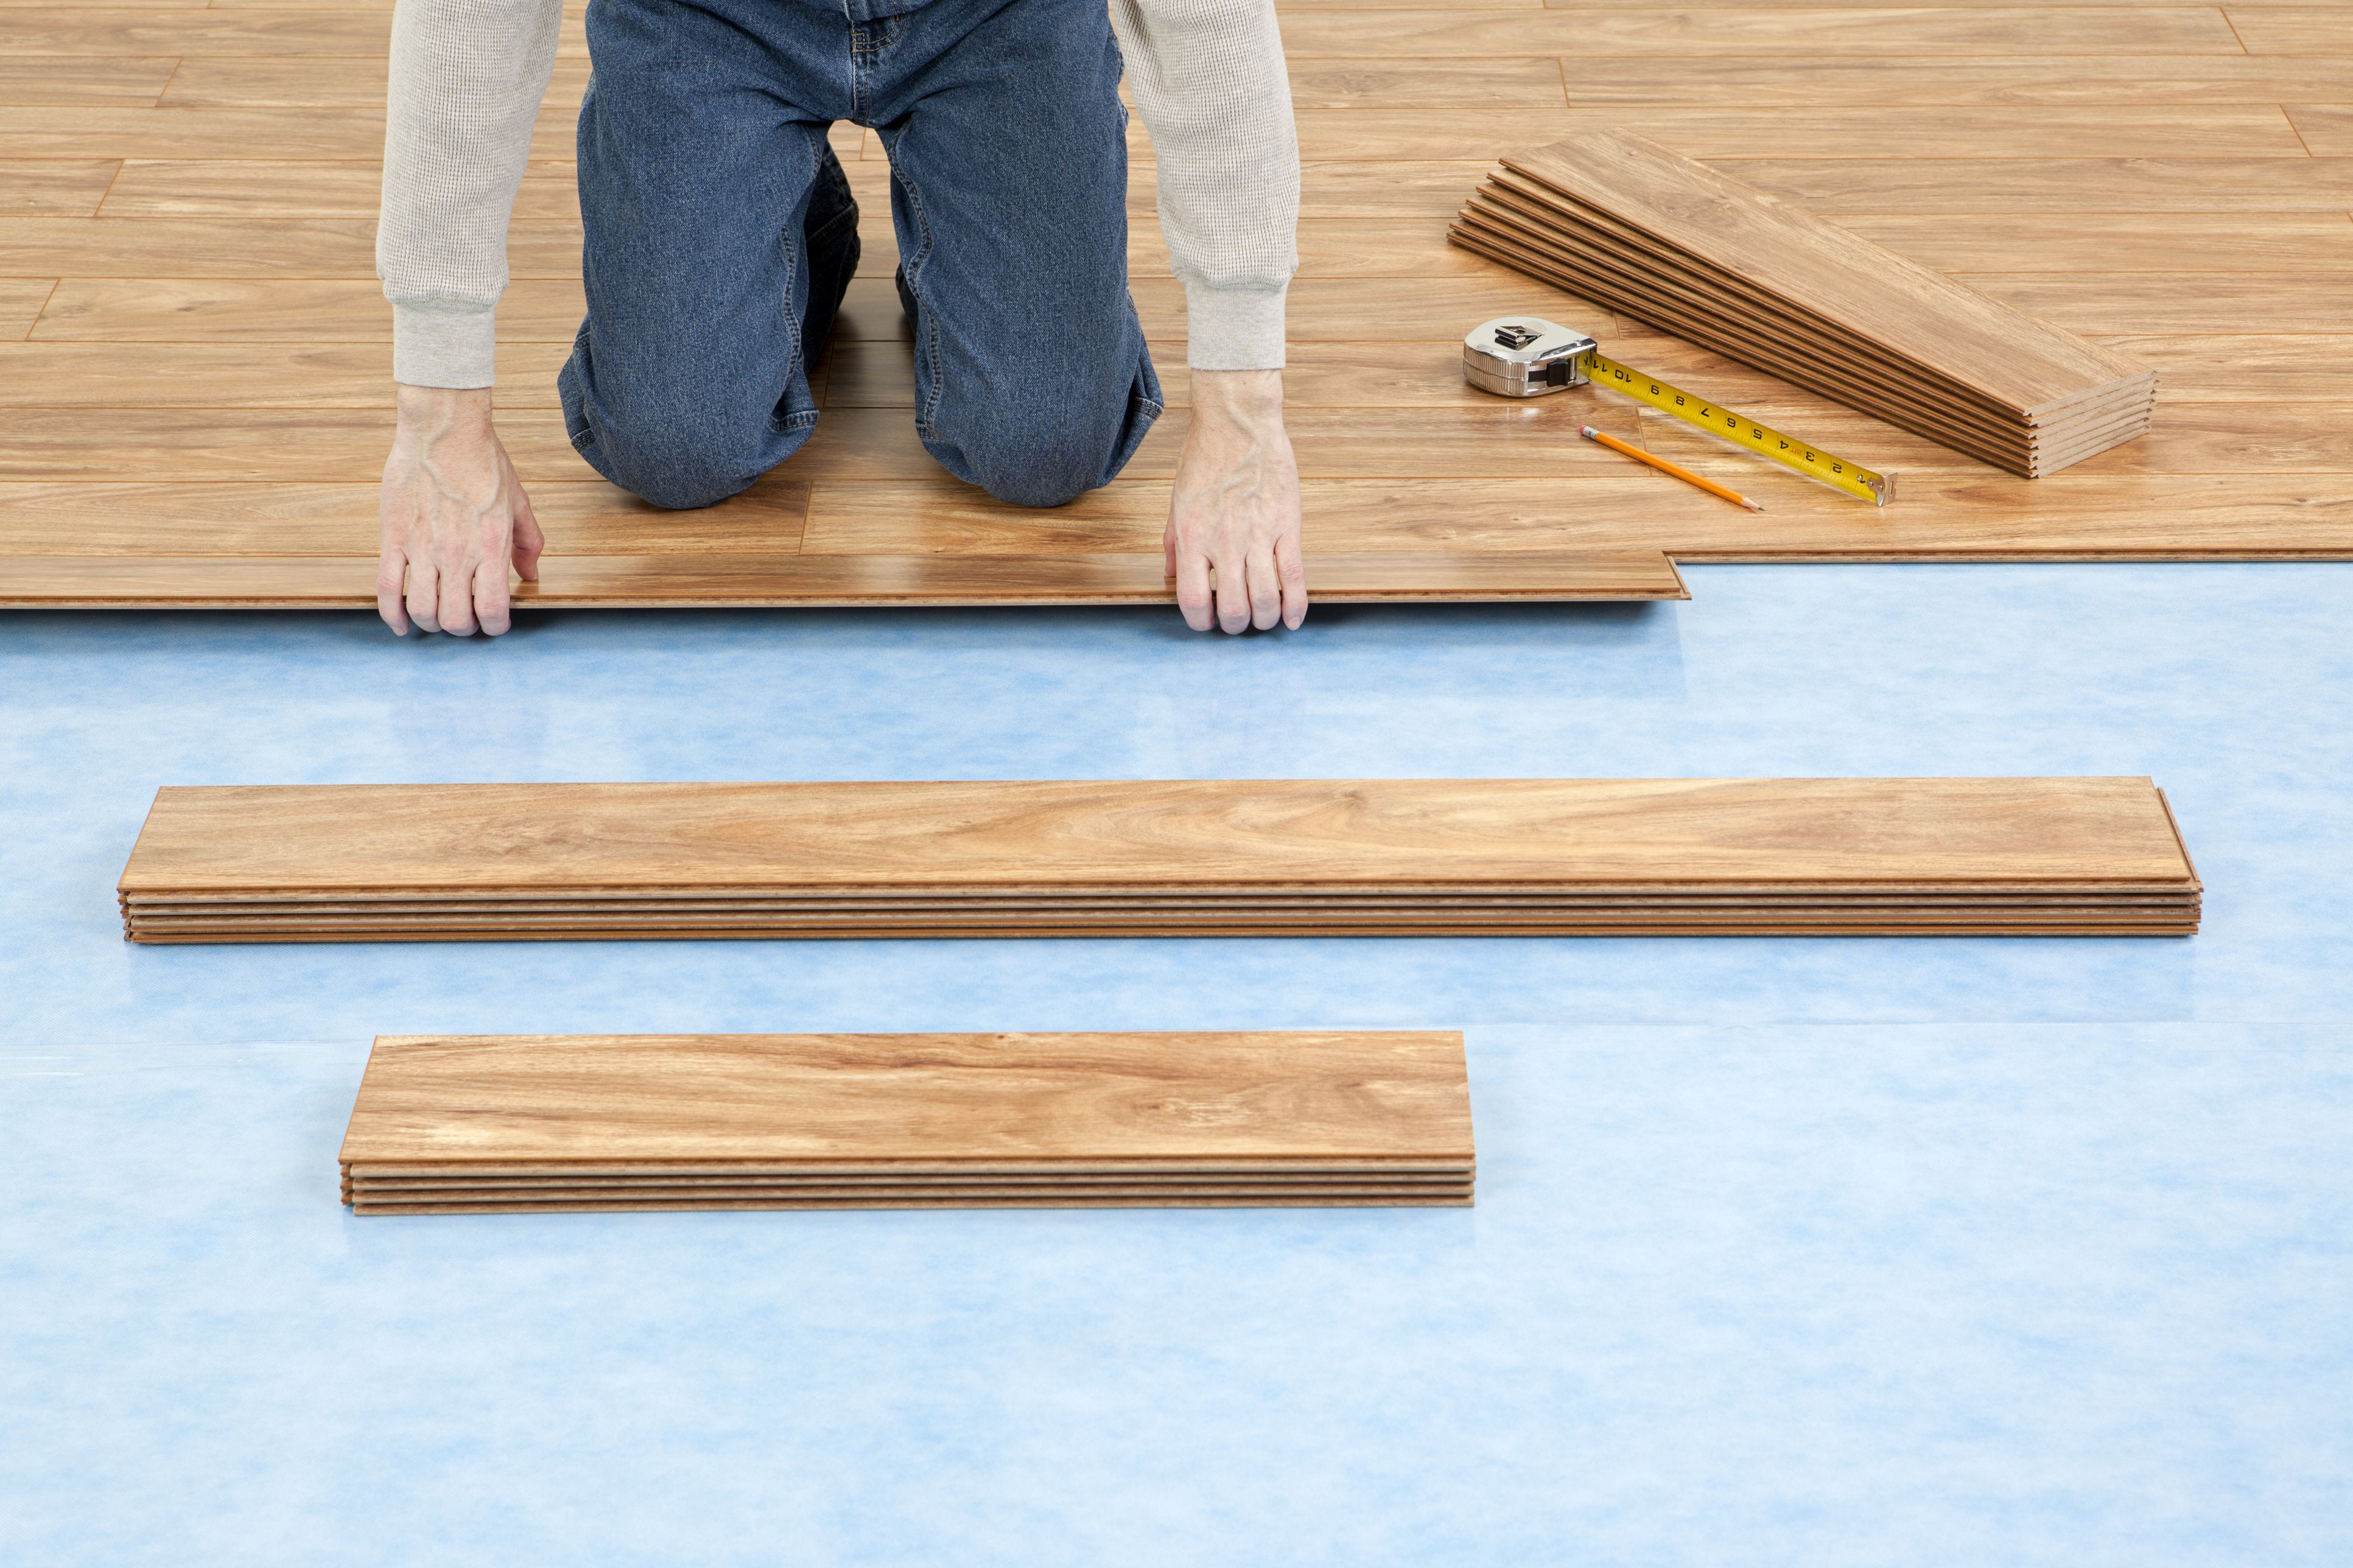 3 8 engineered hardwood flooring installation of installing laminate flooring with attached underlayment throughout new floor installation 155283725 582735c03df78c6f6af8ac80